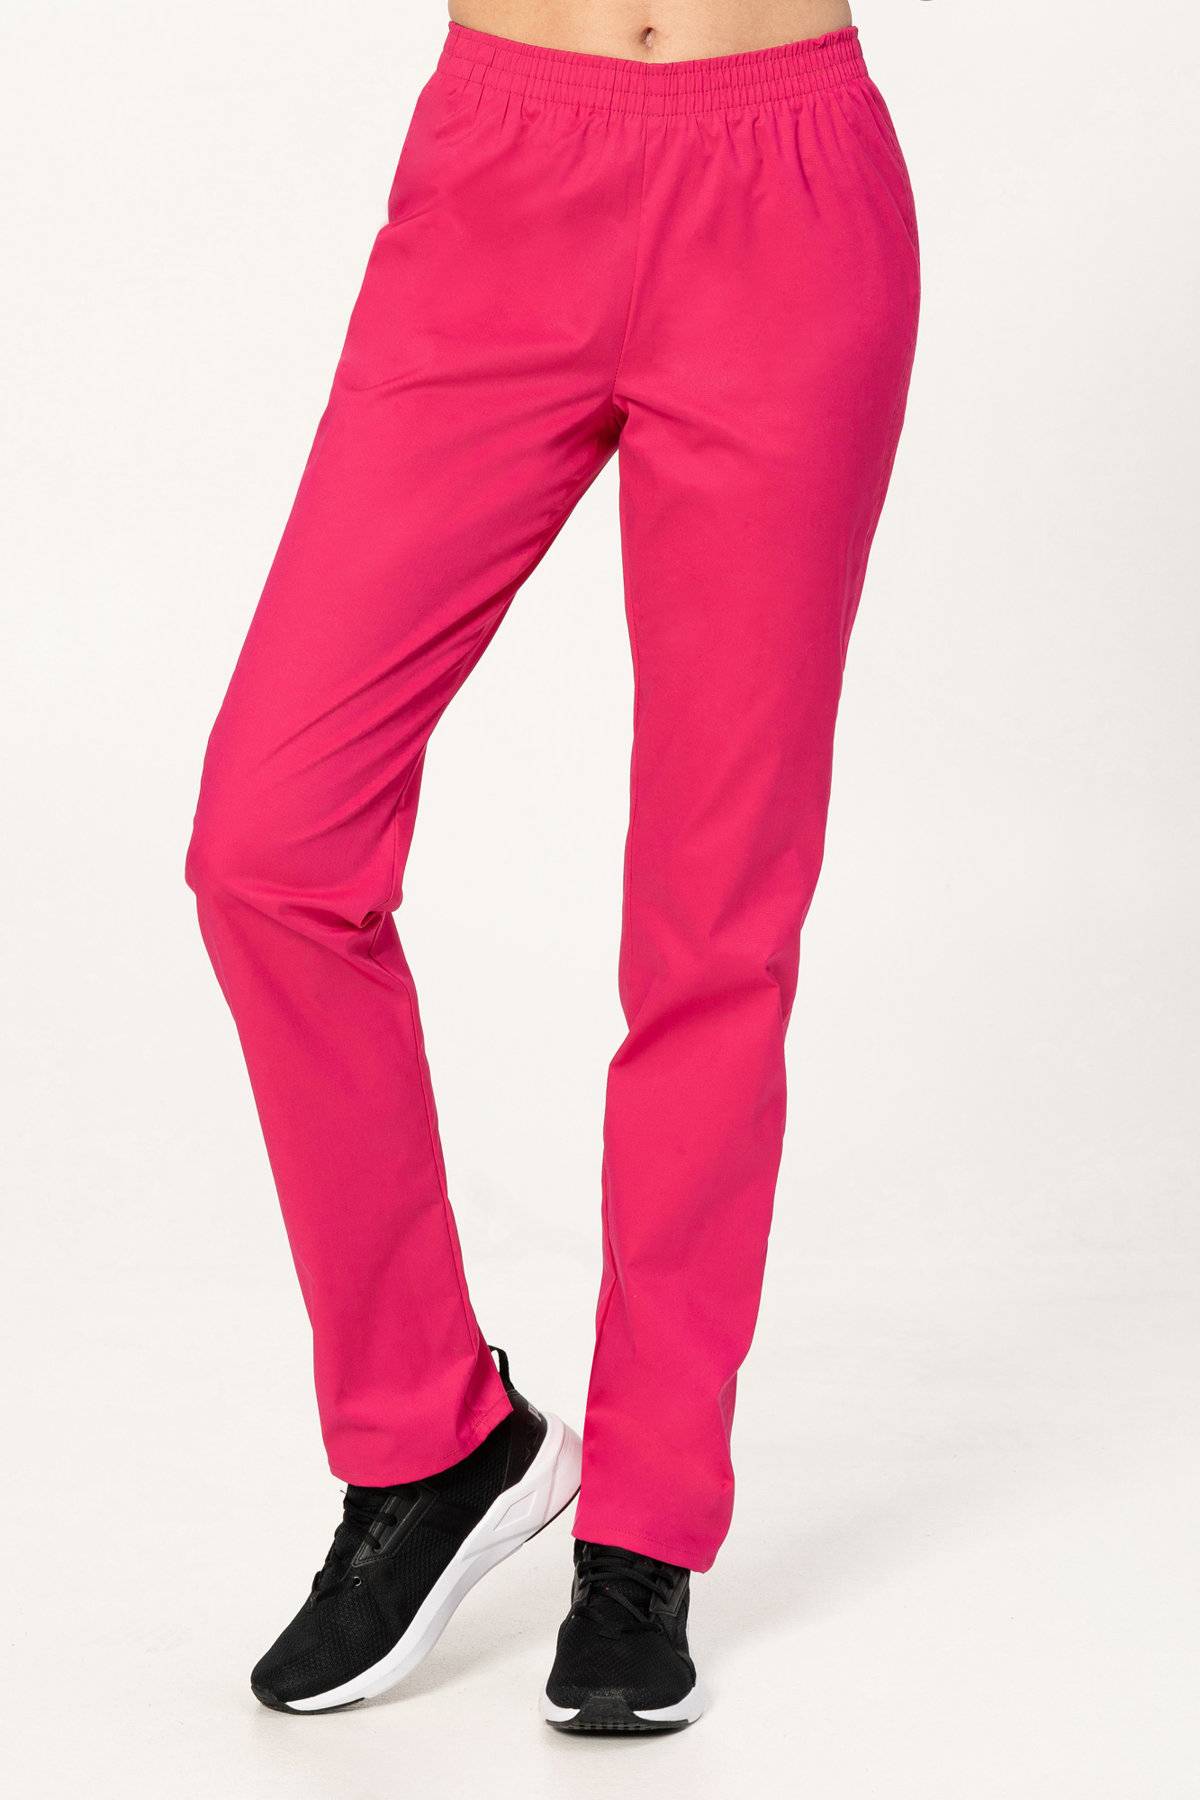 Scrubs / komplet medyczny - bluza + spodnie STRETCH XE7 - różne kolory